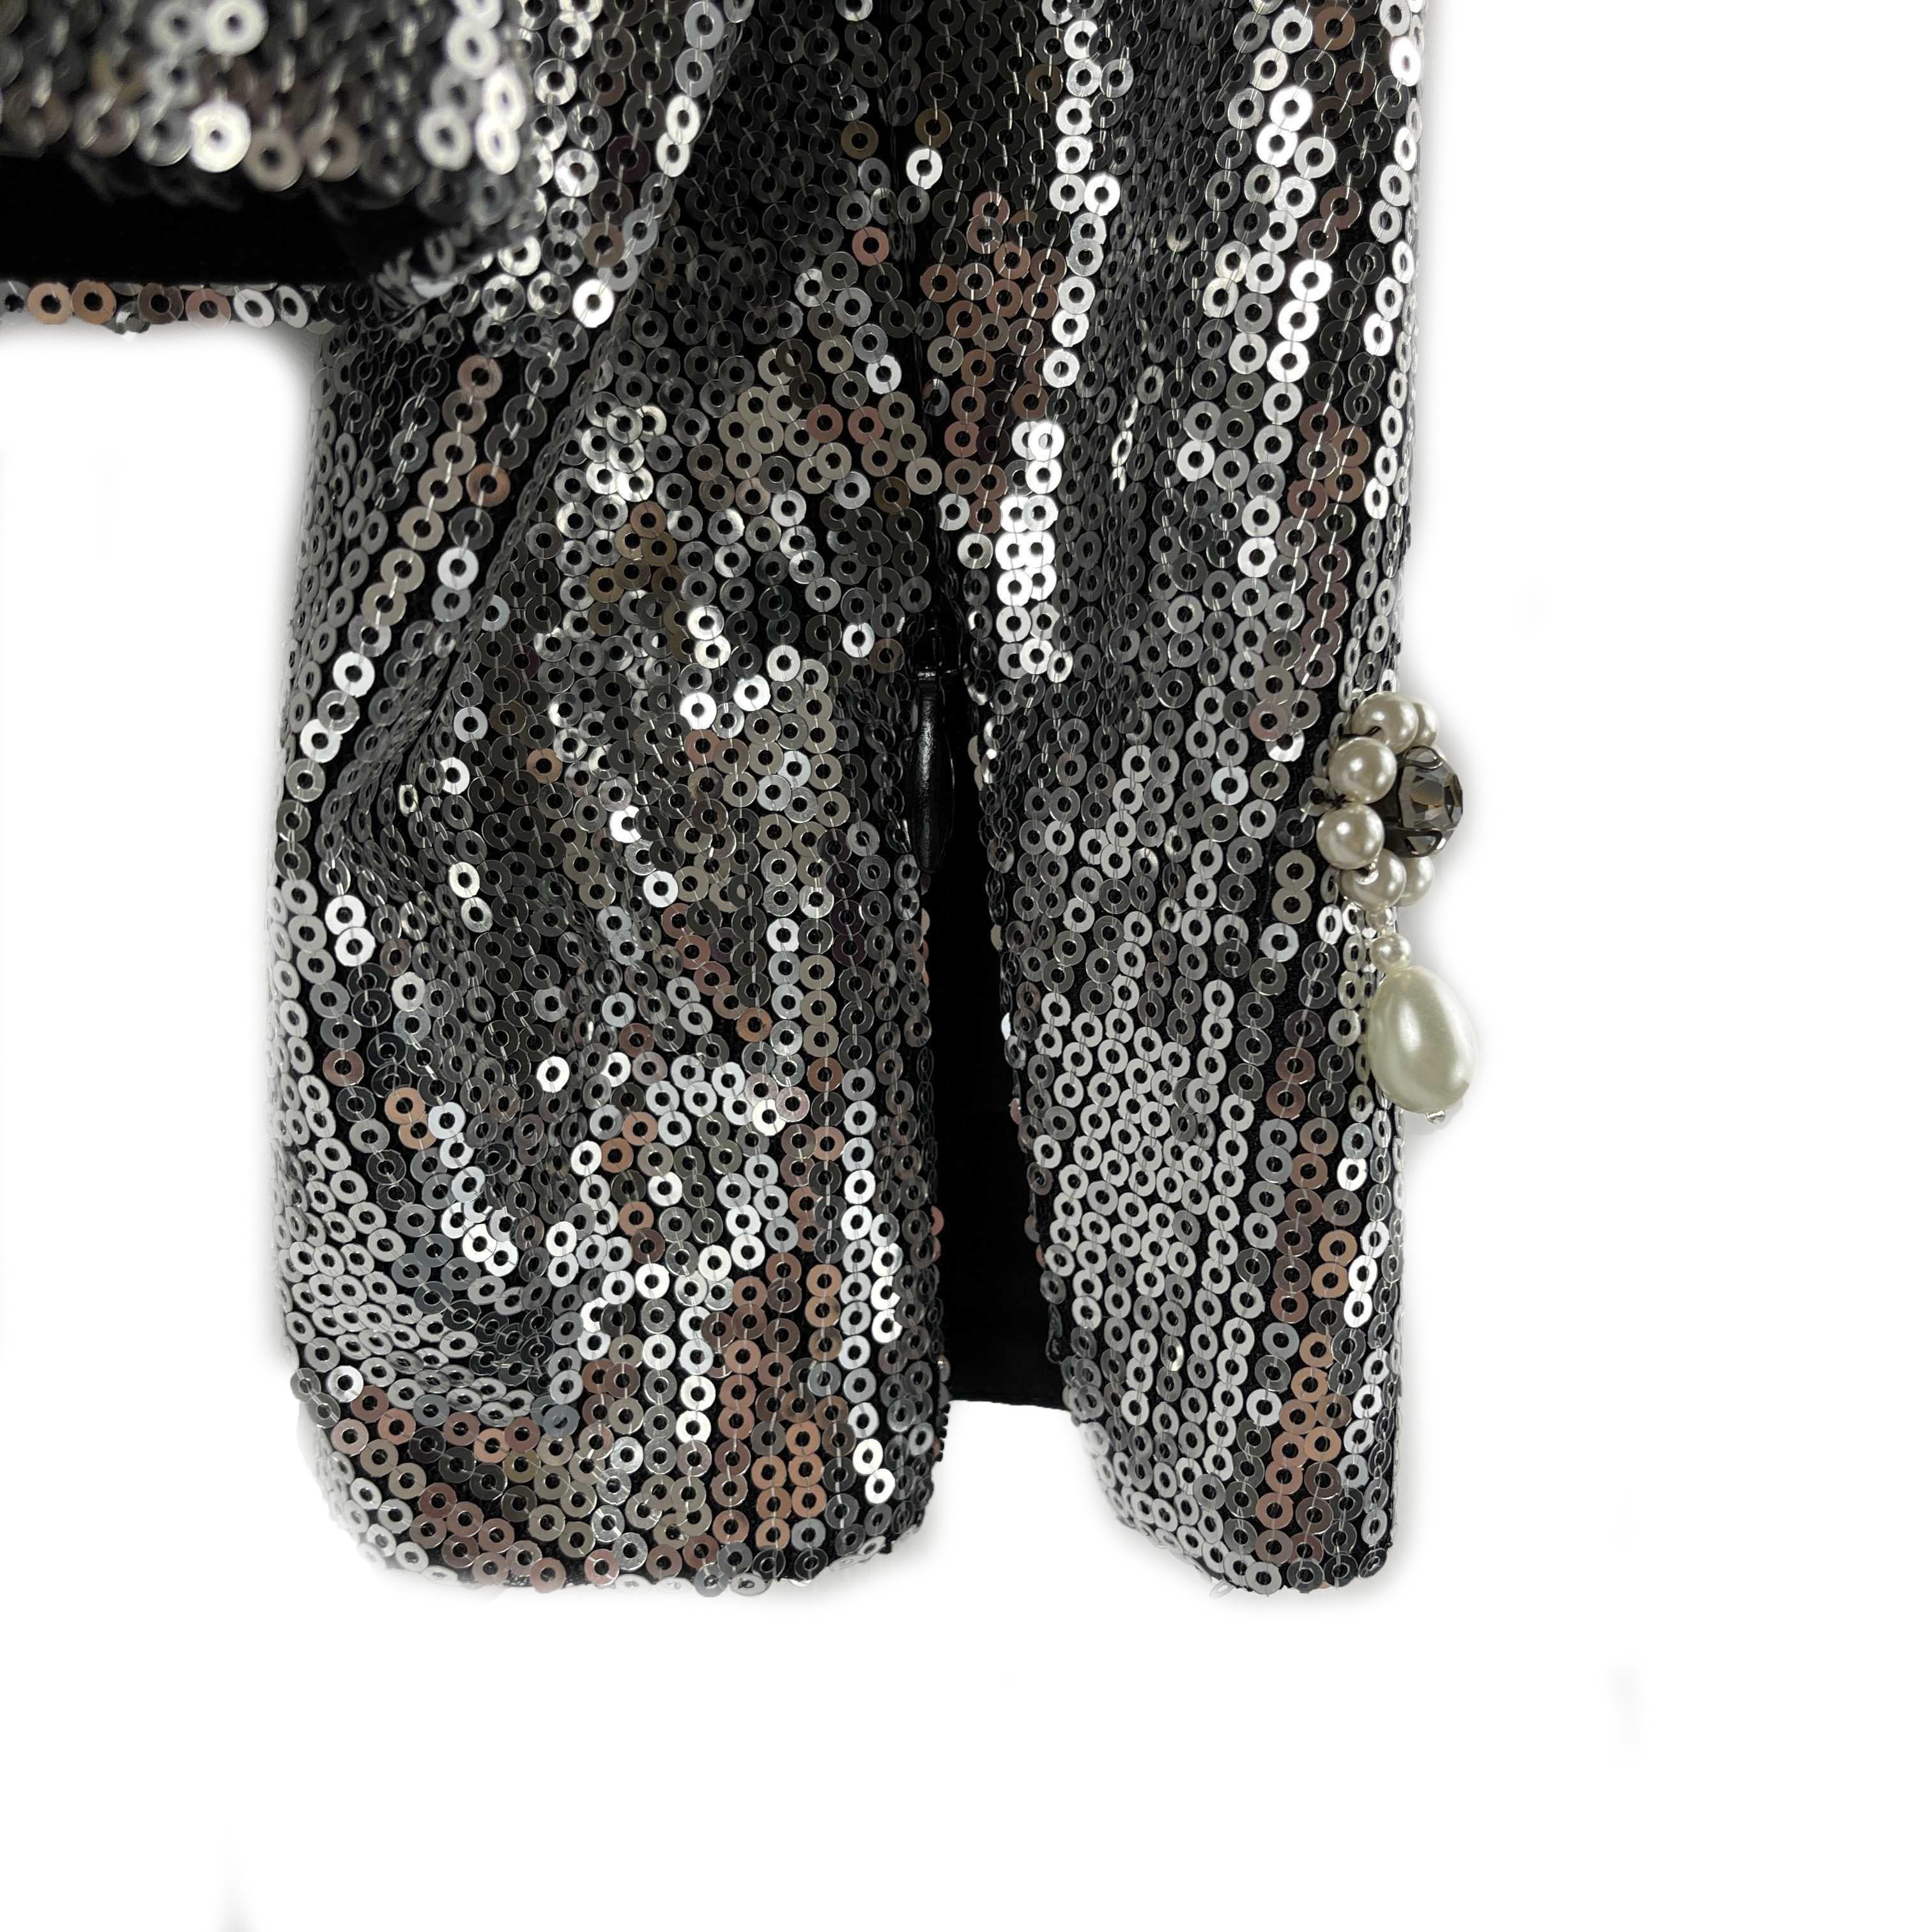 Erdem - New w/ Tags - Tonya Sequin Embellished Long Sleeve - UK 6 US 2 - Top 5